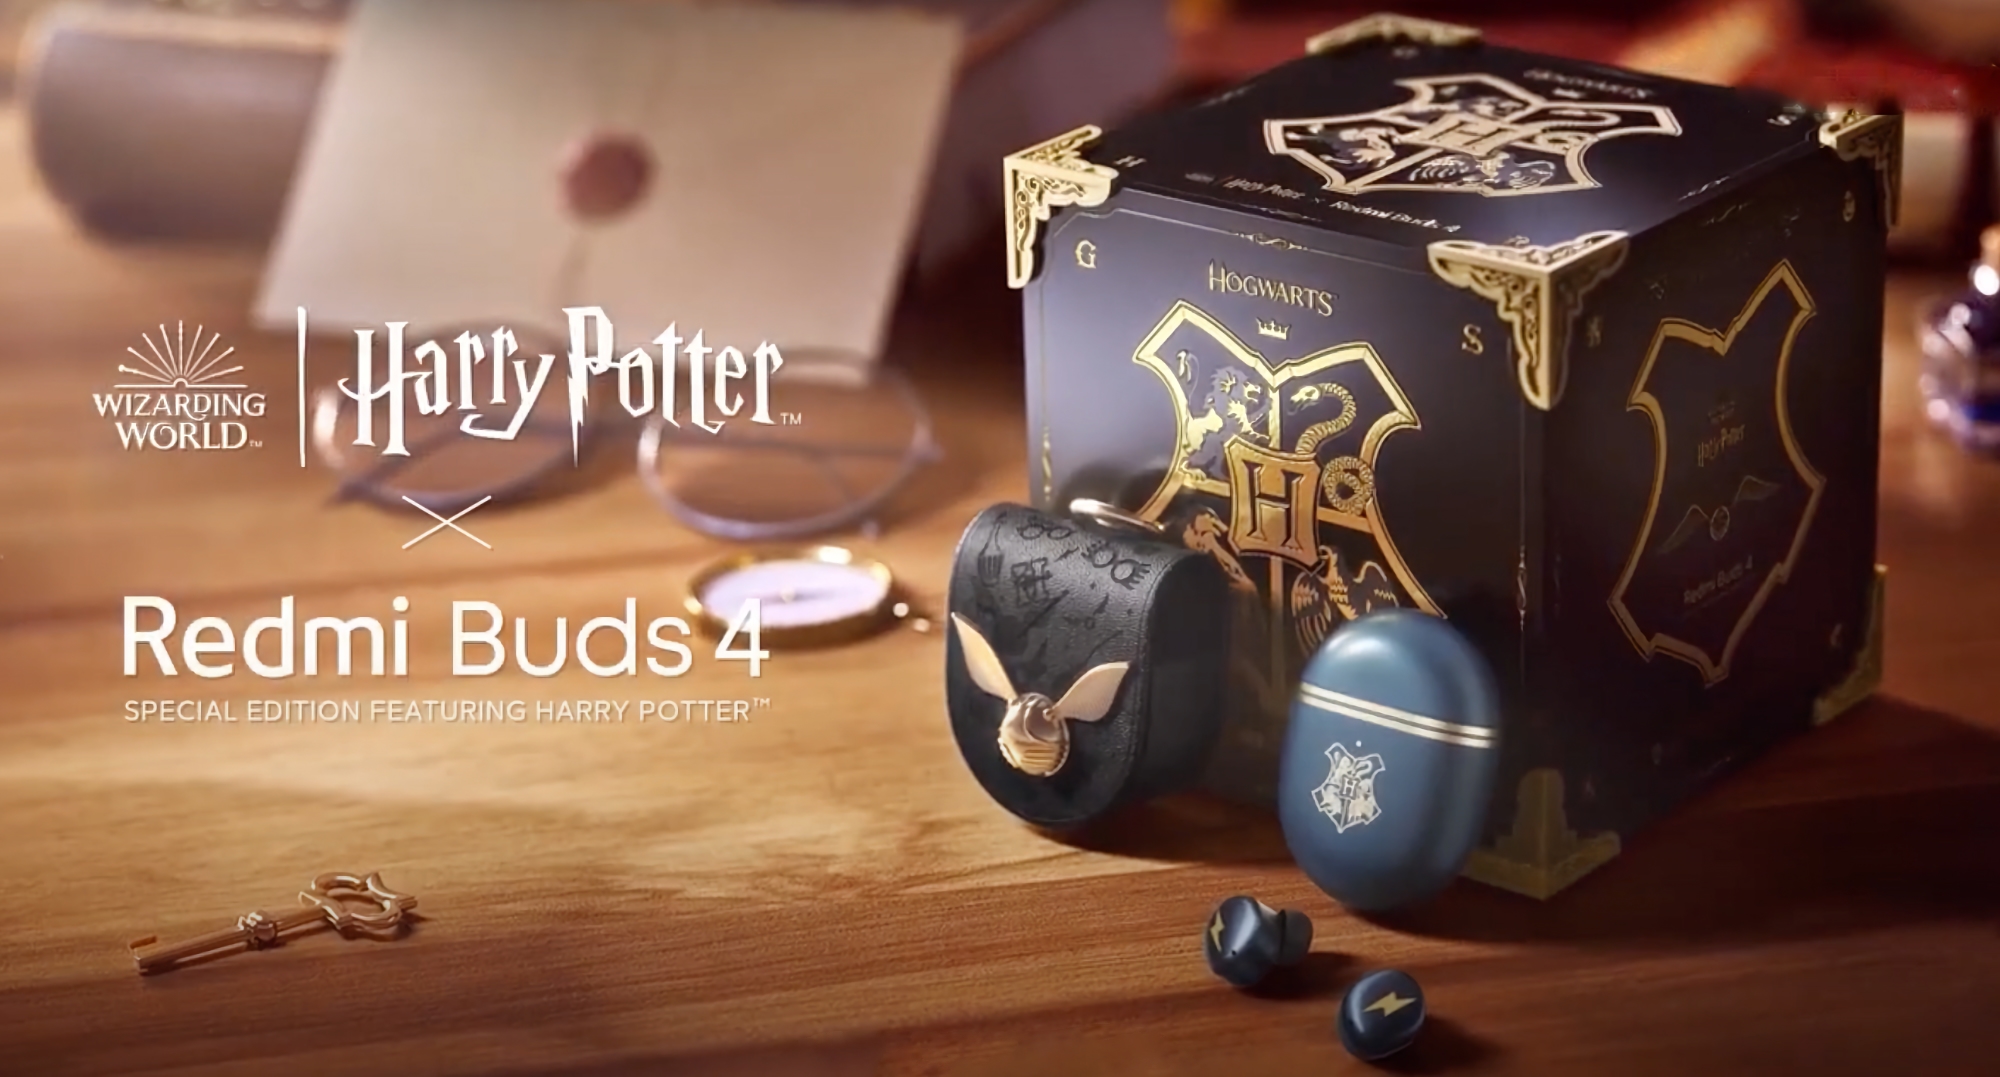 Xiaomi presenta Redmi Buds 4 in edizione speciale da 58 dollari per i fan di Harry Potter